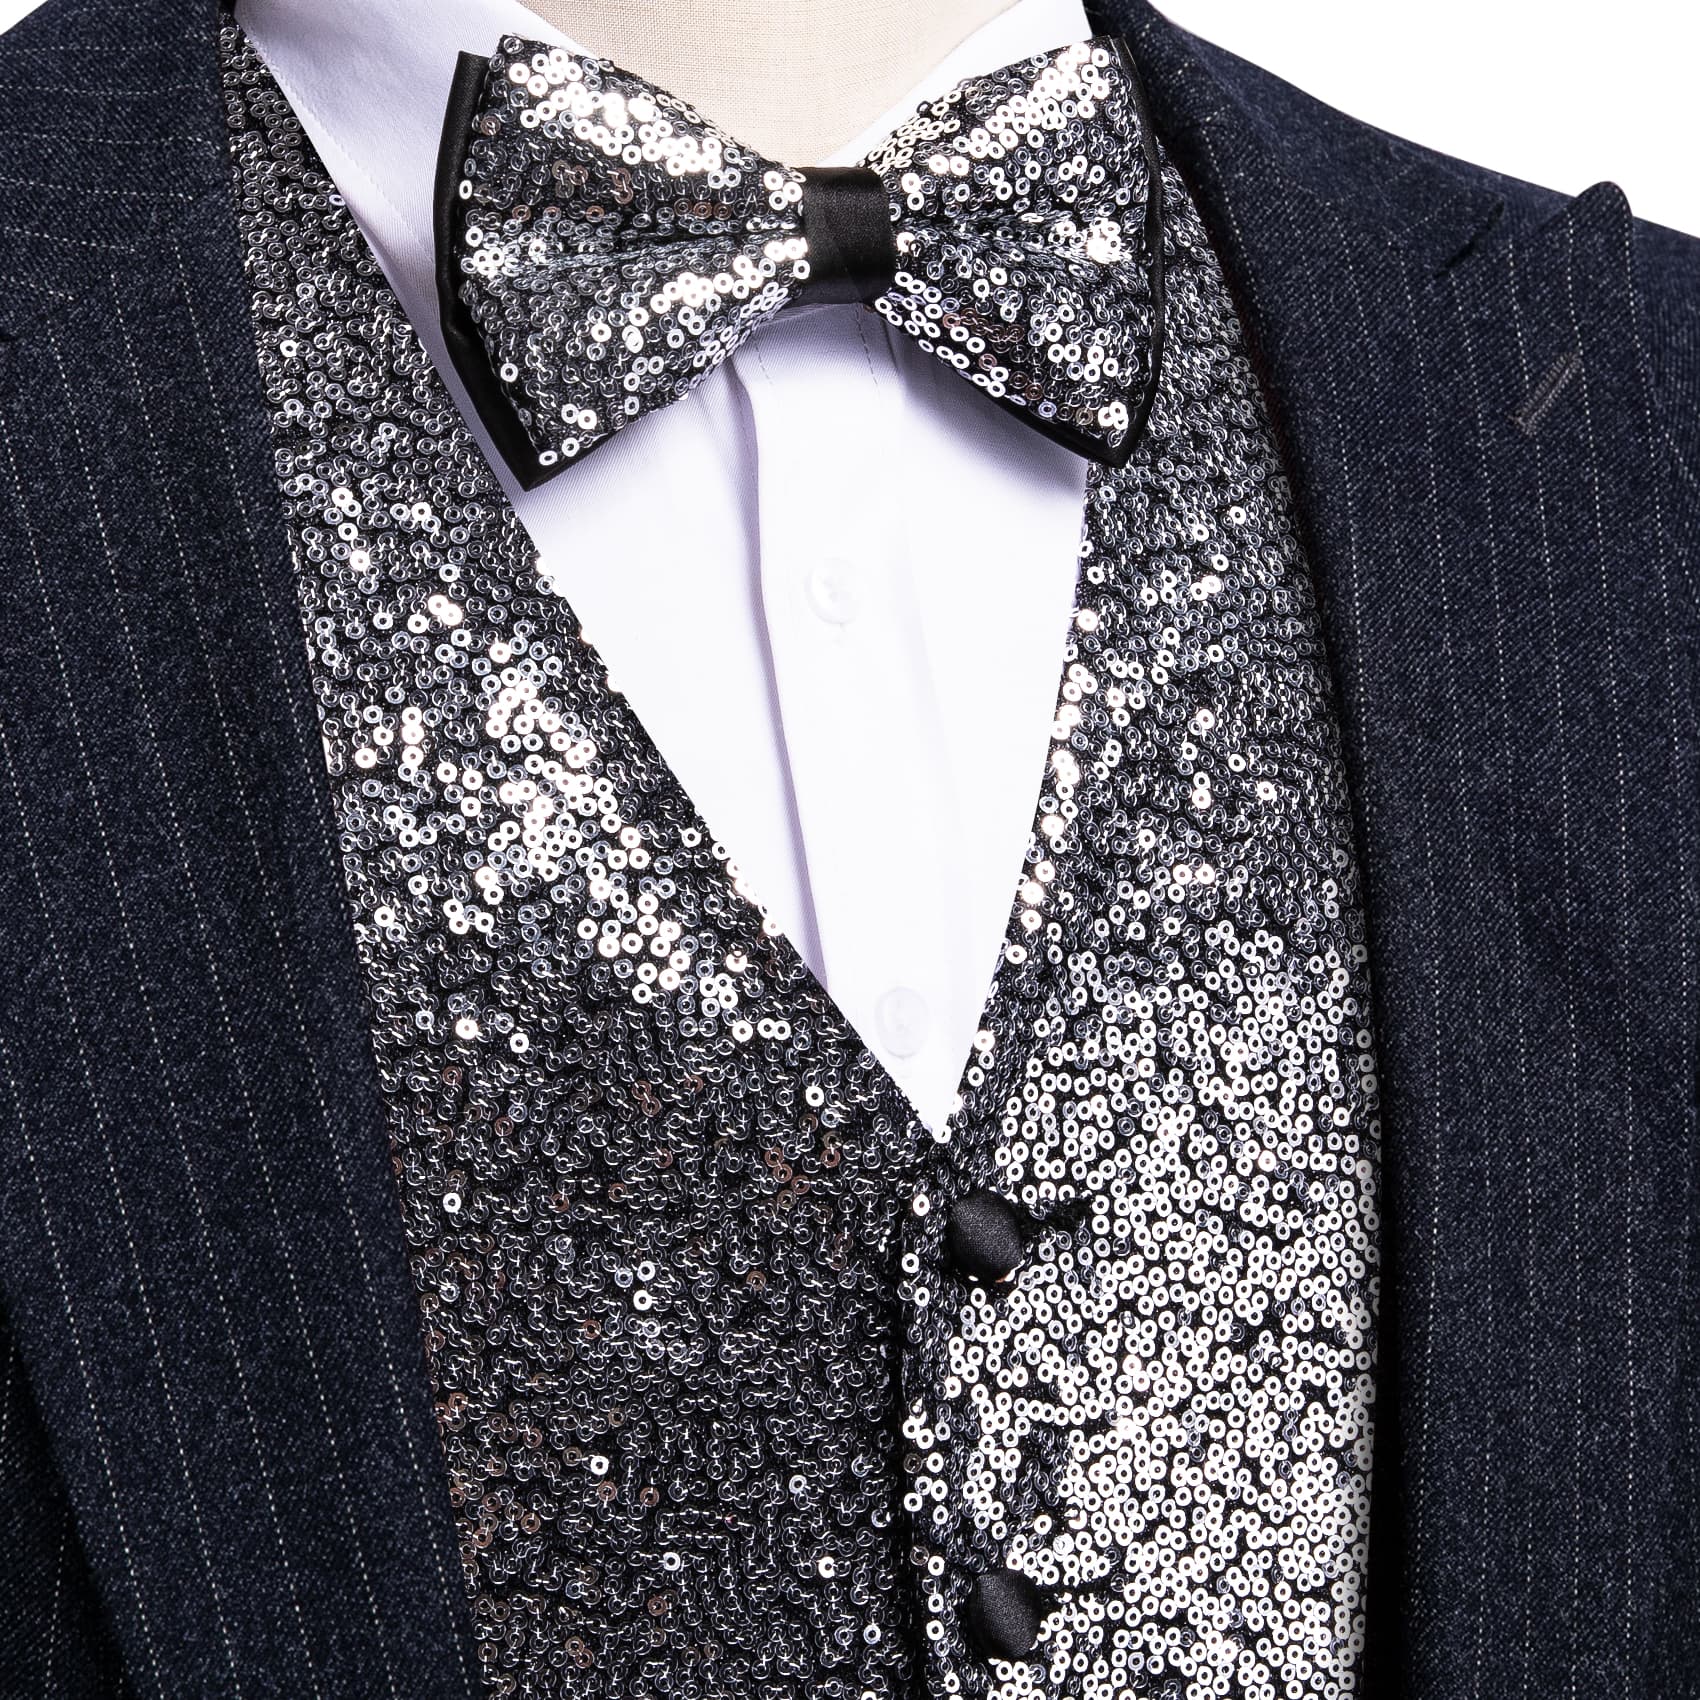 Sequin Top for Men Dark Gray Solid V-Neck Vest Bow Tie Set